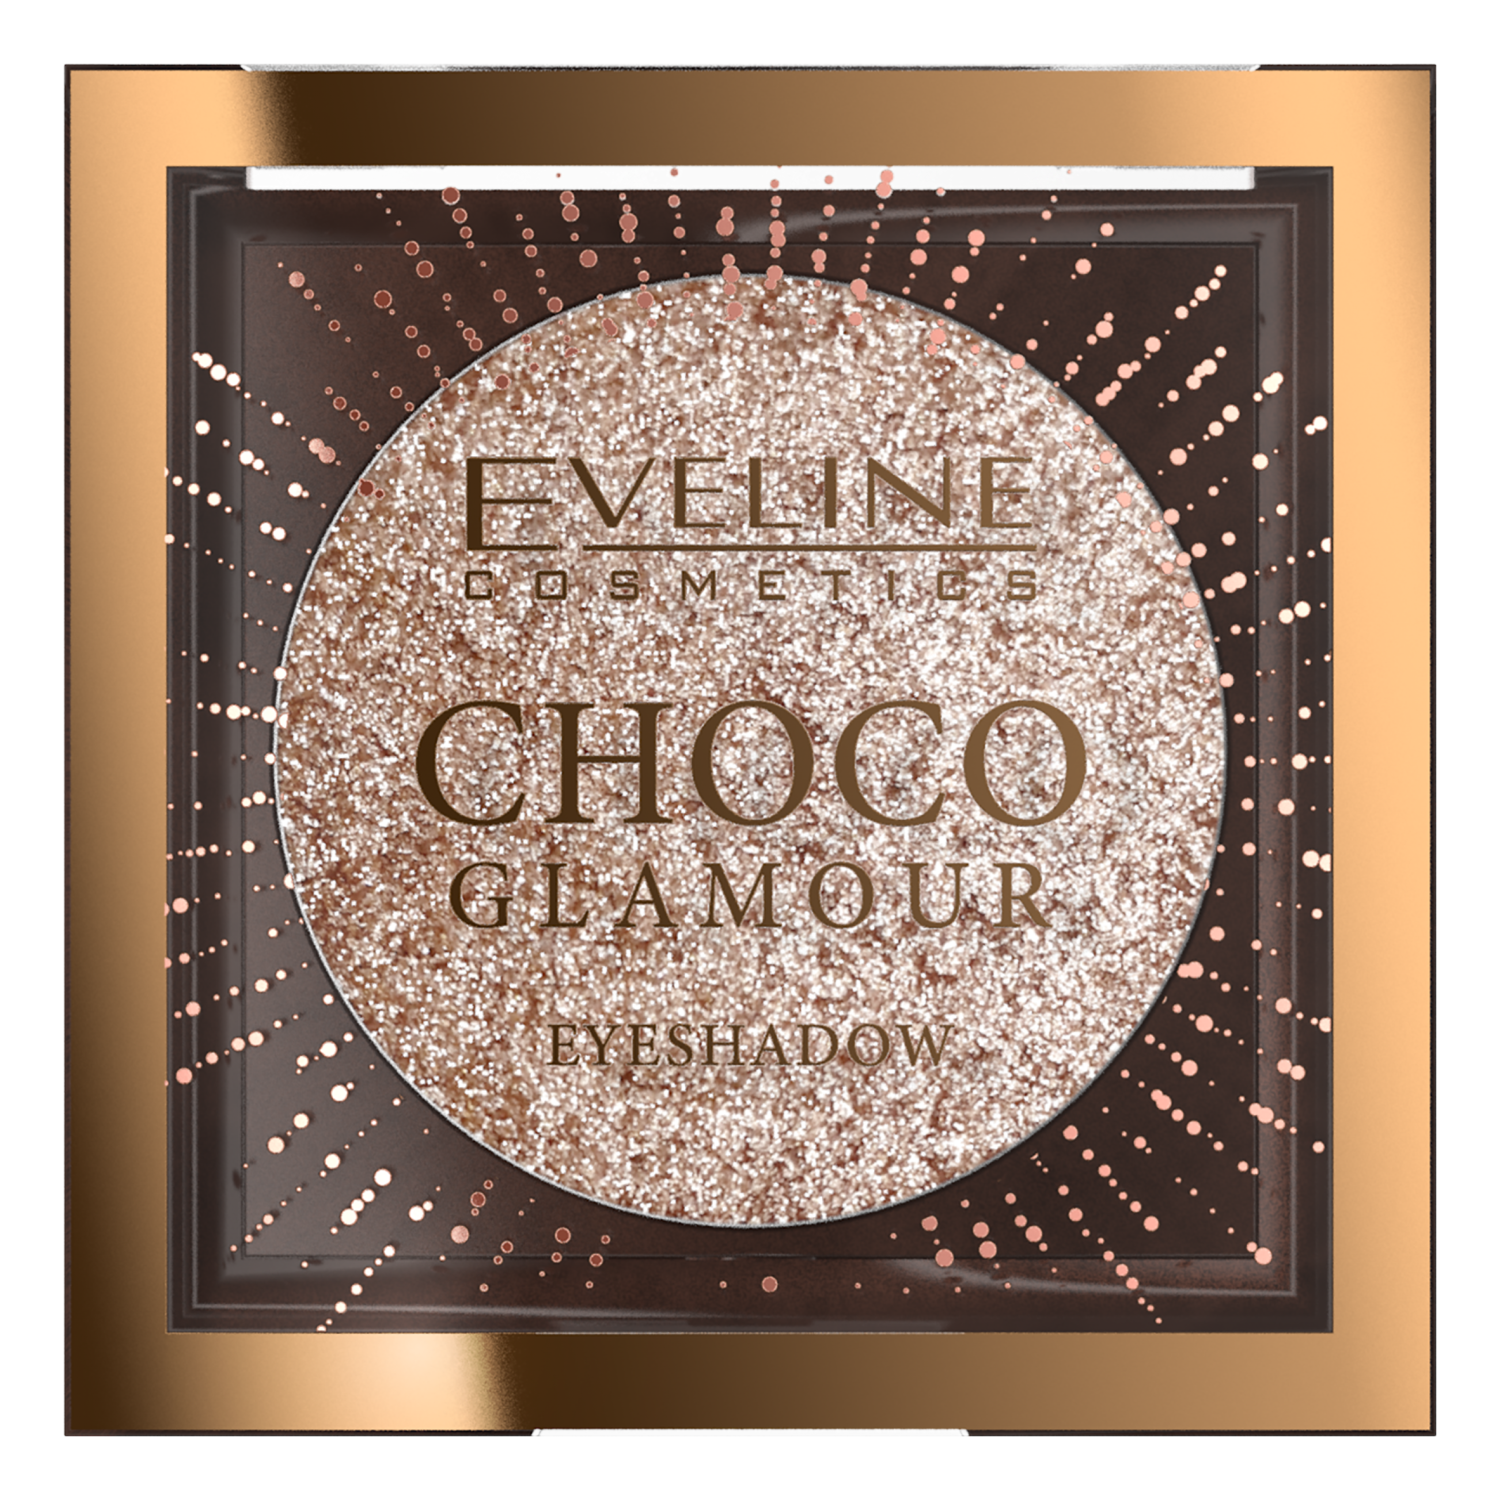 Eveline Cosmetics Choco Glamour